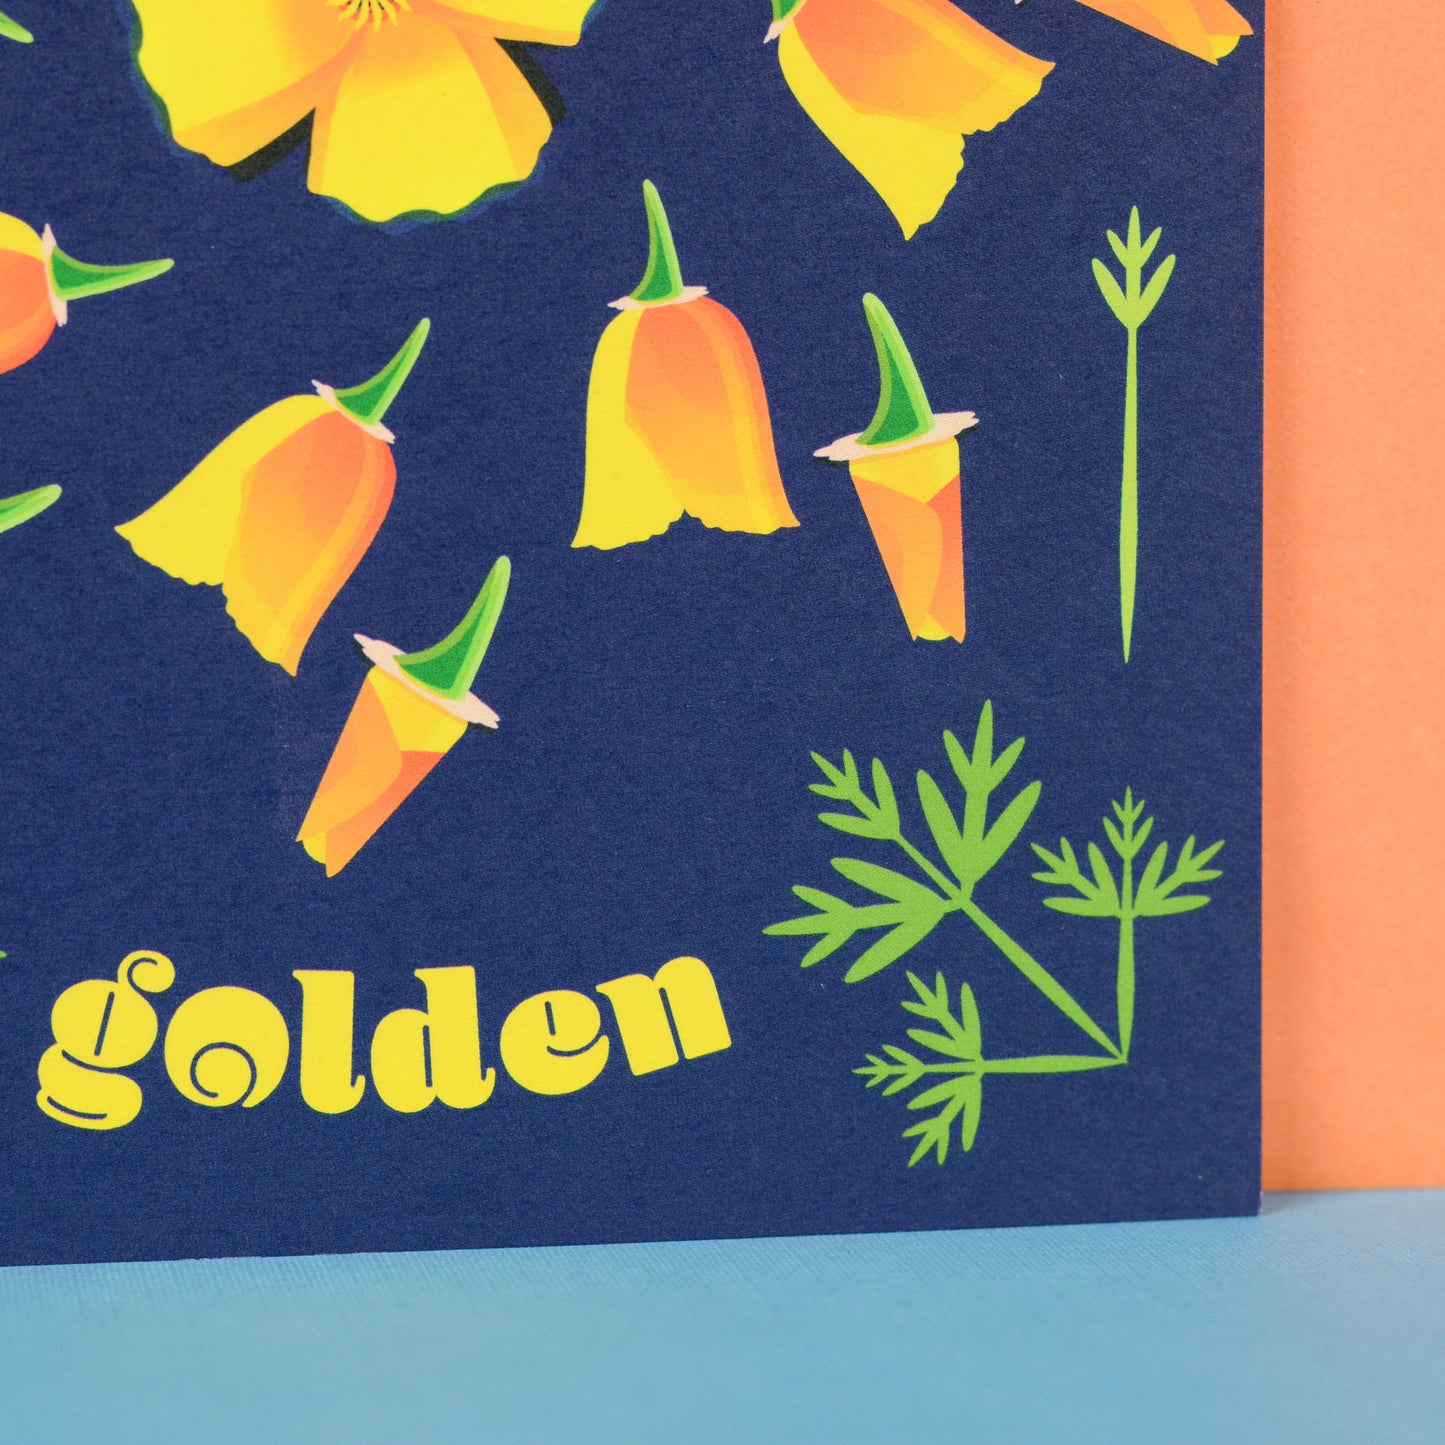 Stay Golden Poppy Flower Greeting Card